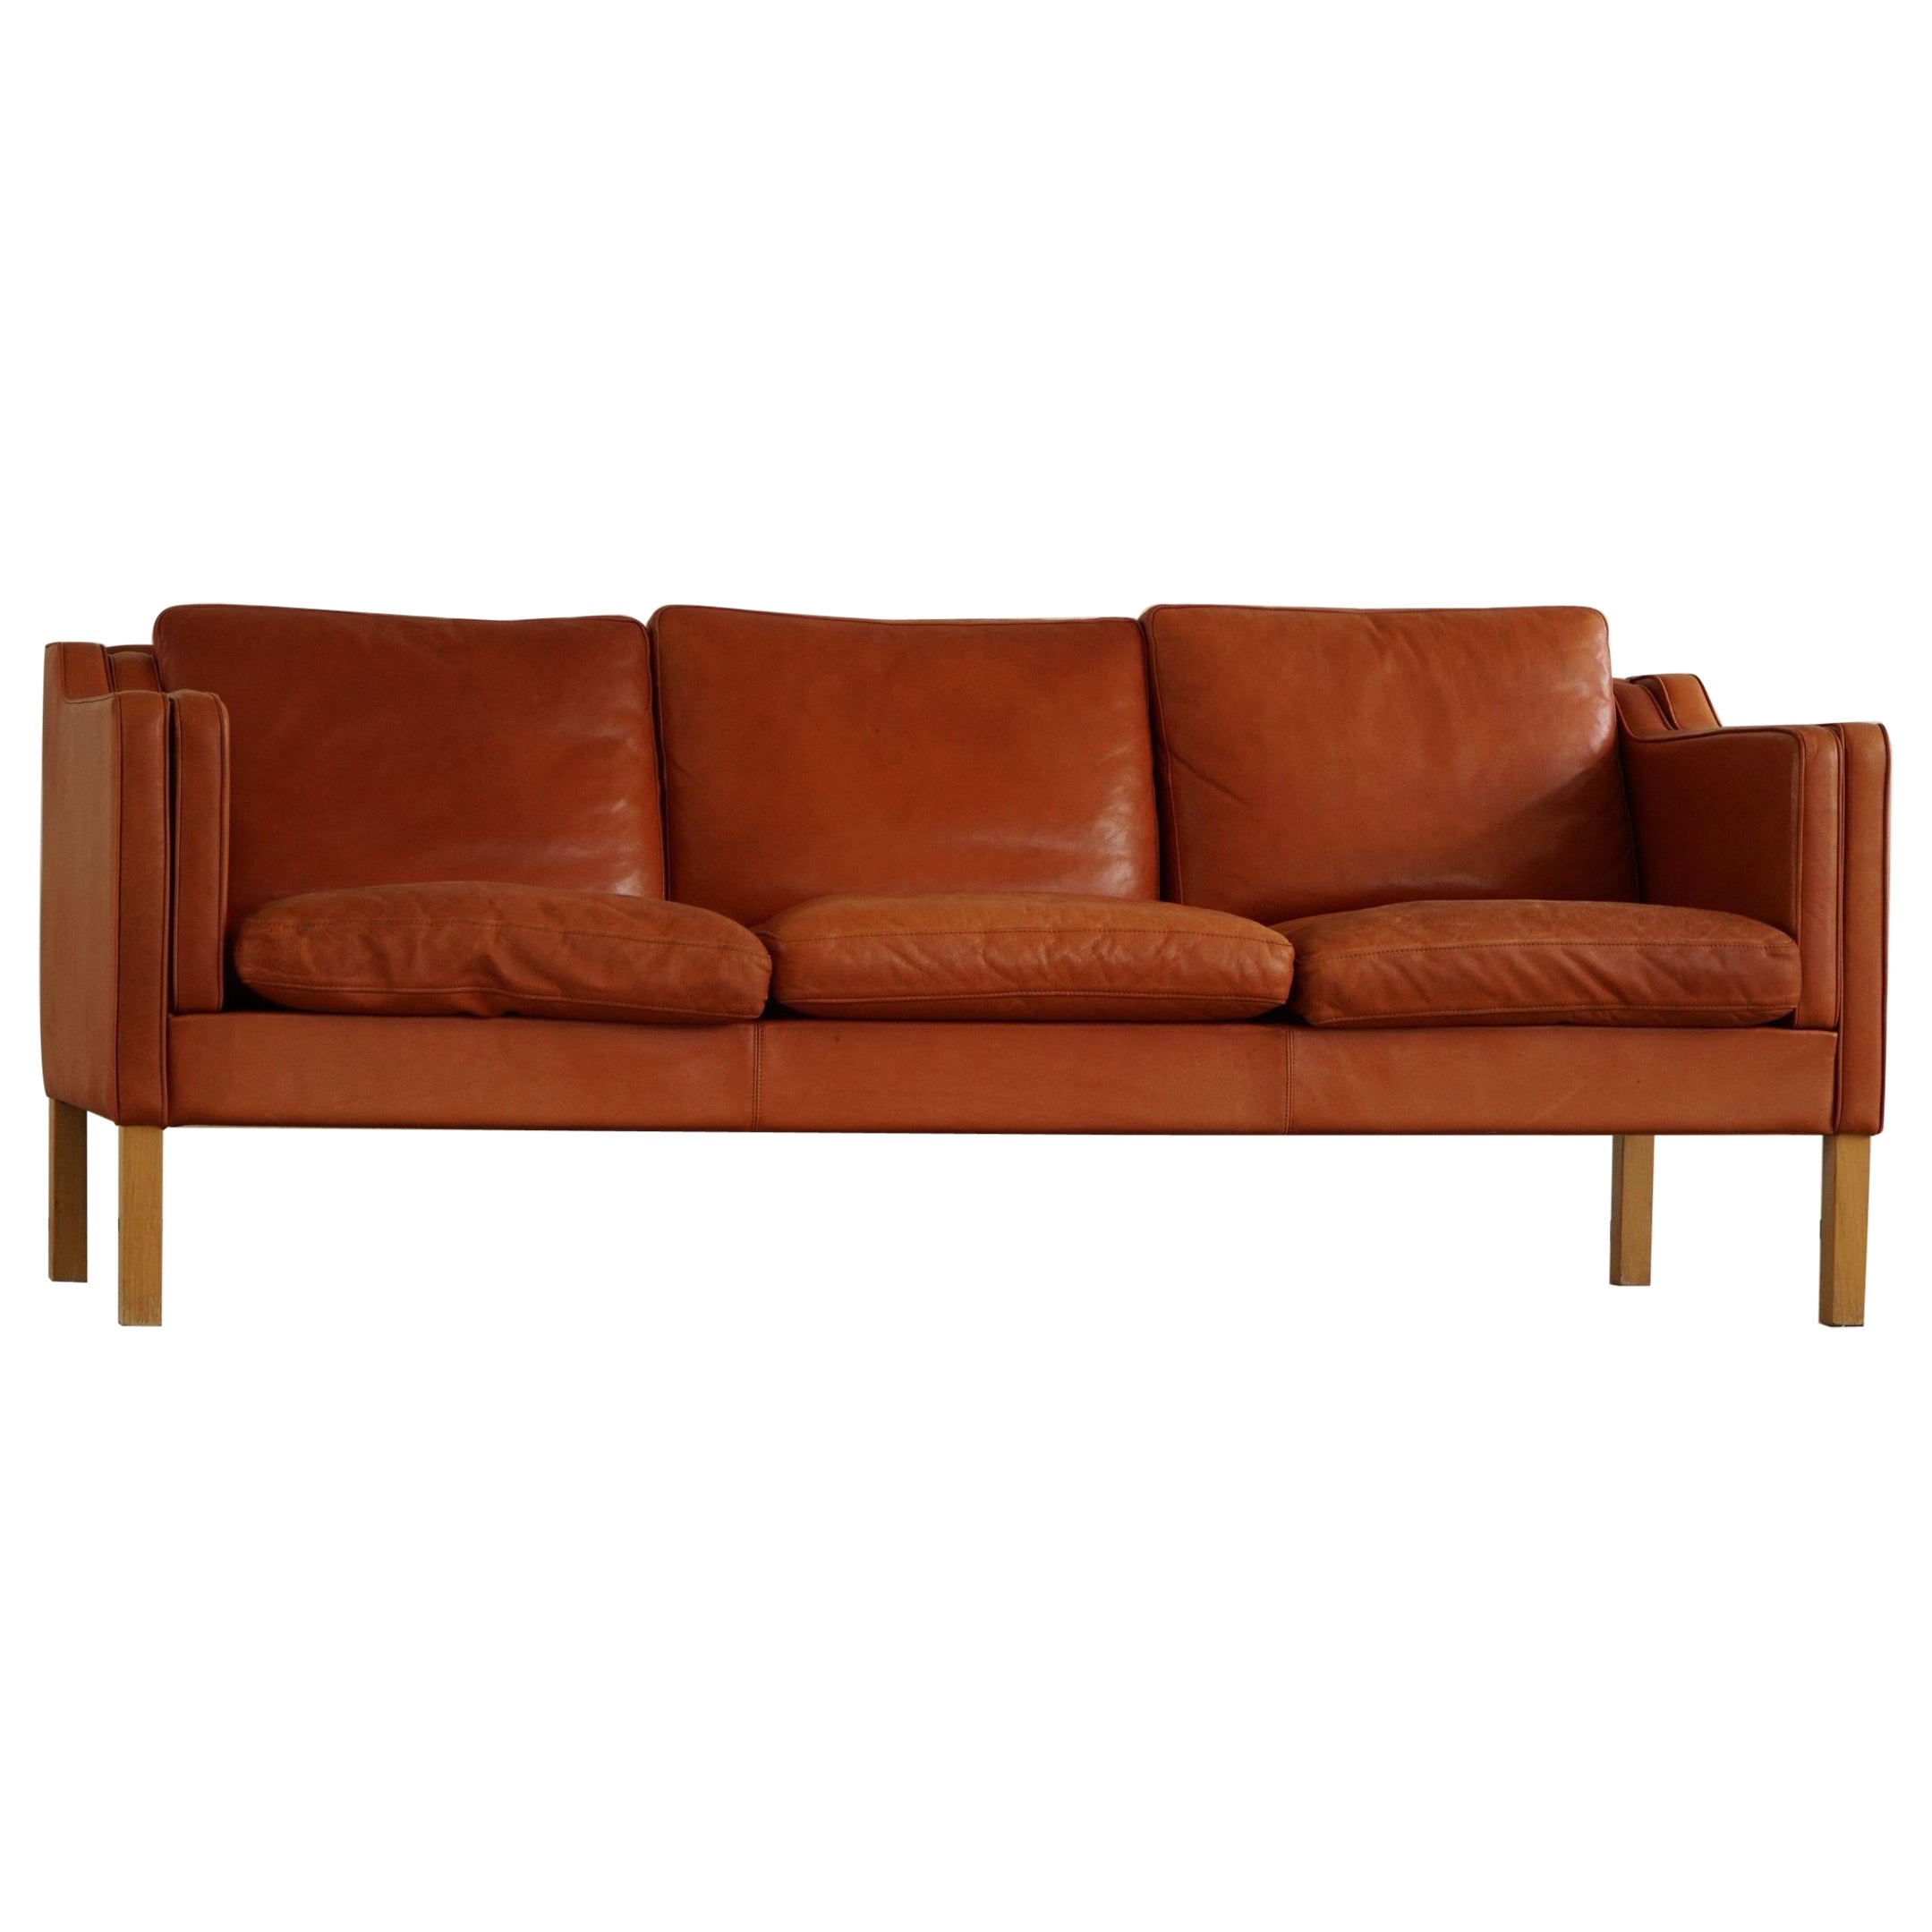 Classic Danish Mid Century Three Seater Sofa in Cognac Leather, Made in 1970s